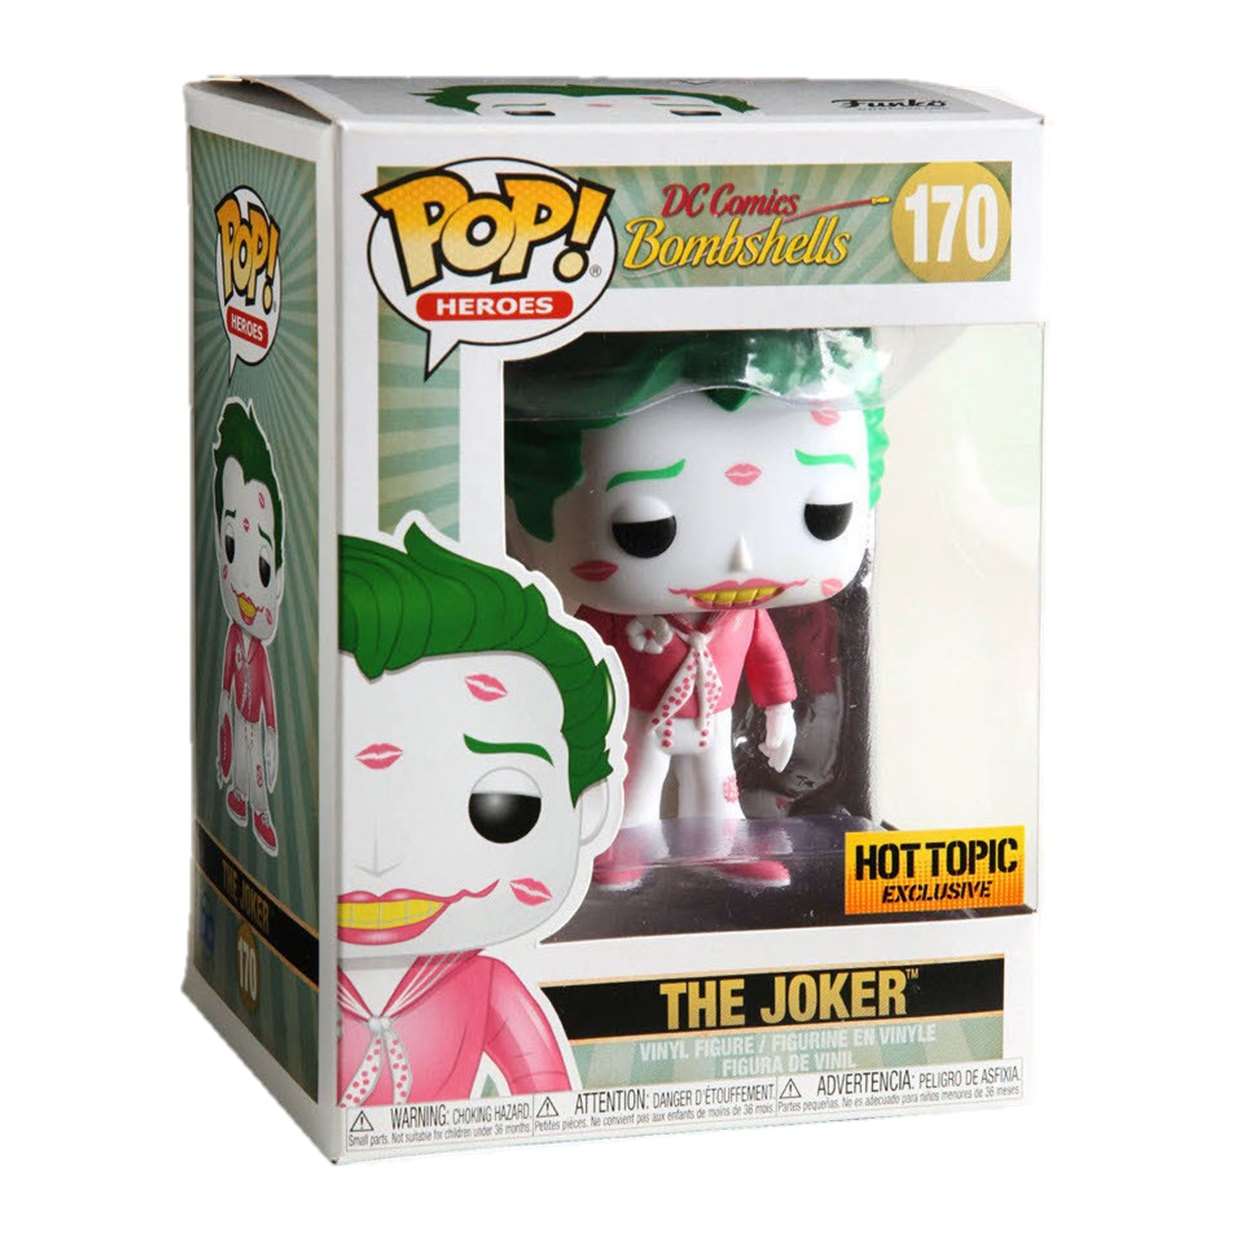 The Joker #170 Figura Dc Comic Bombshell Funko Pop! Exc Hot Topic